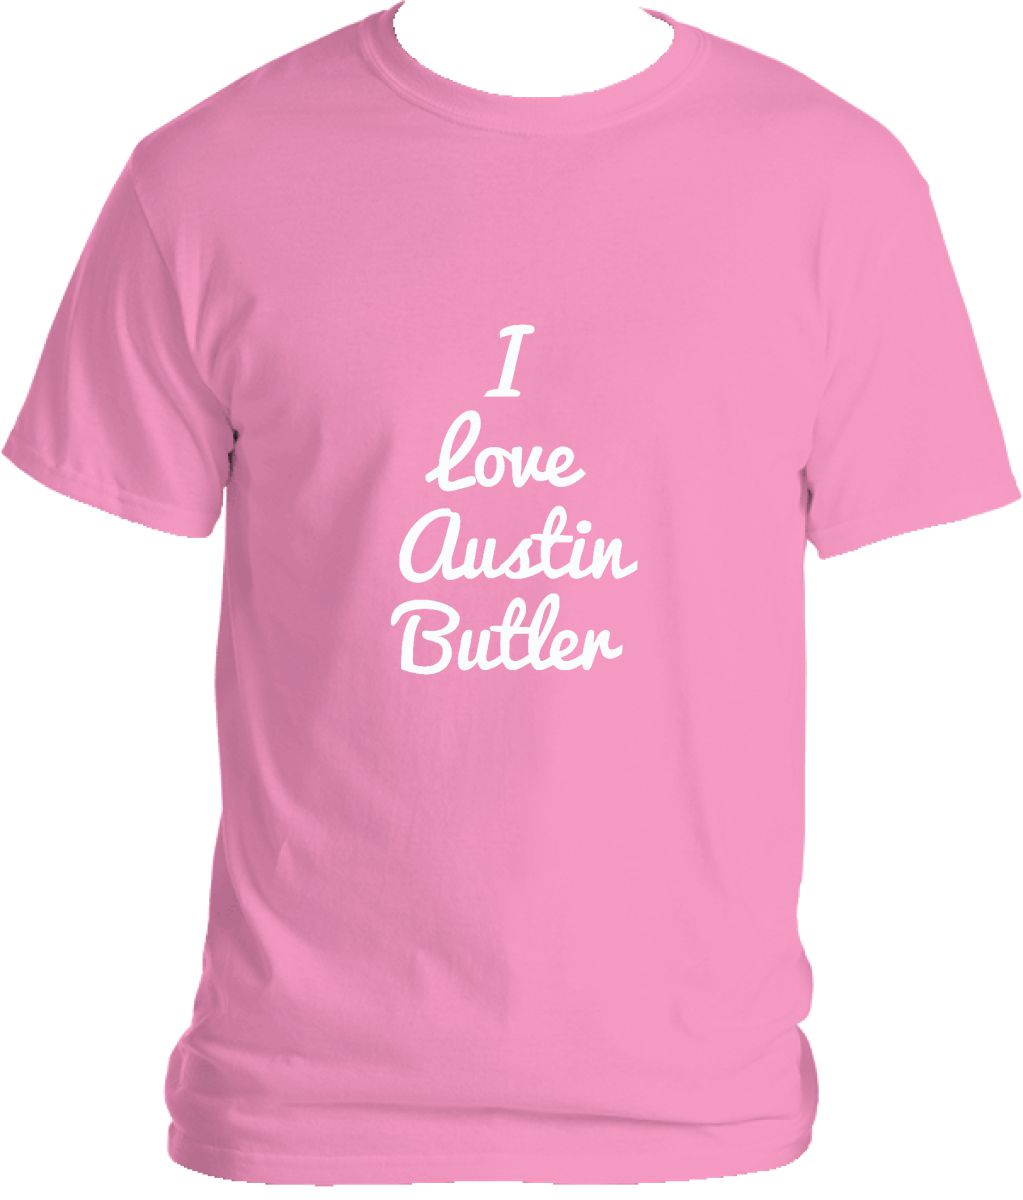 I Love Austin Butler Shirt (pink)